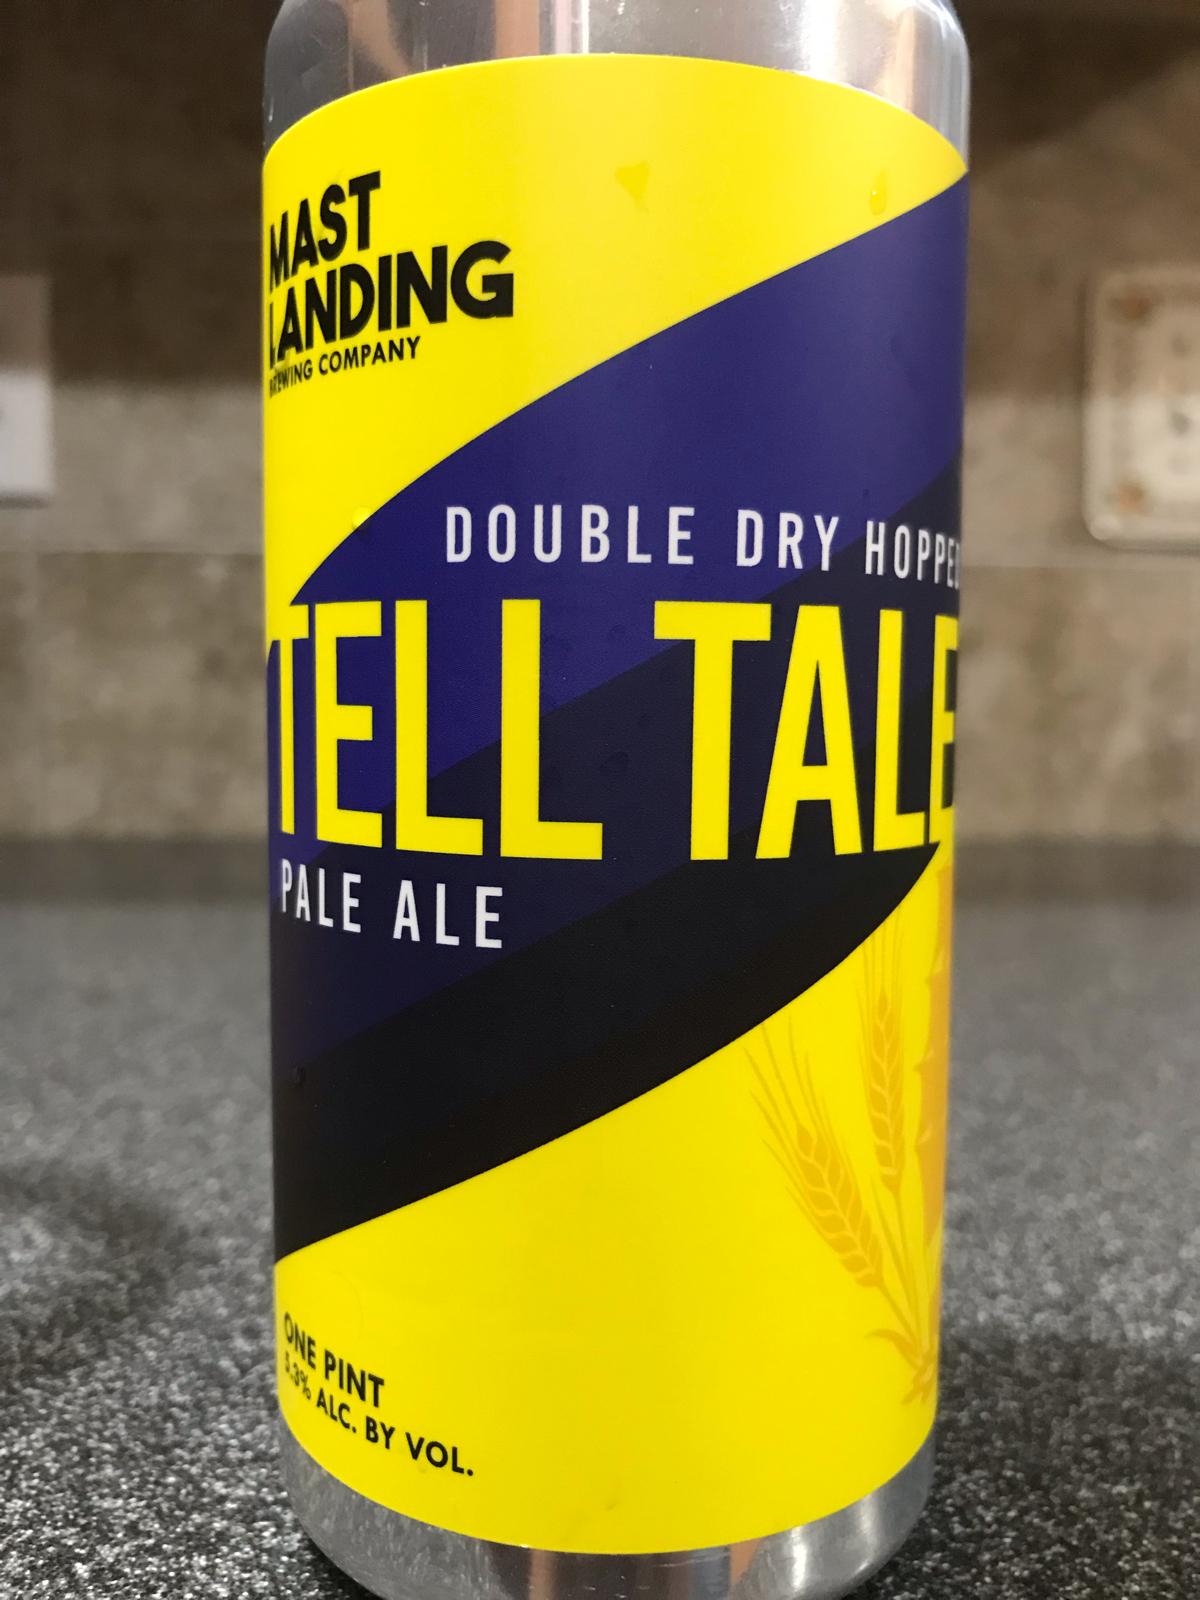 Tell Tale Pale Ale